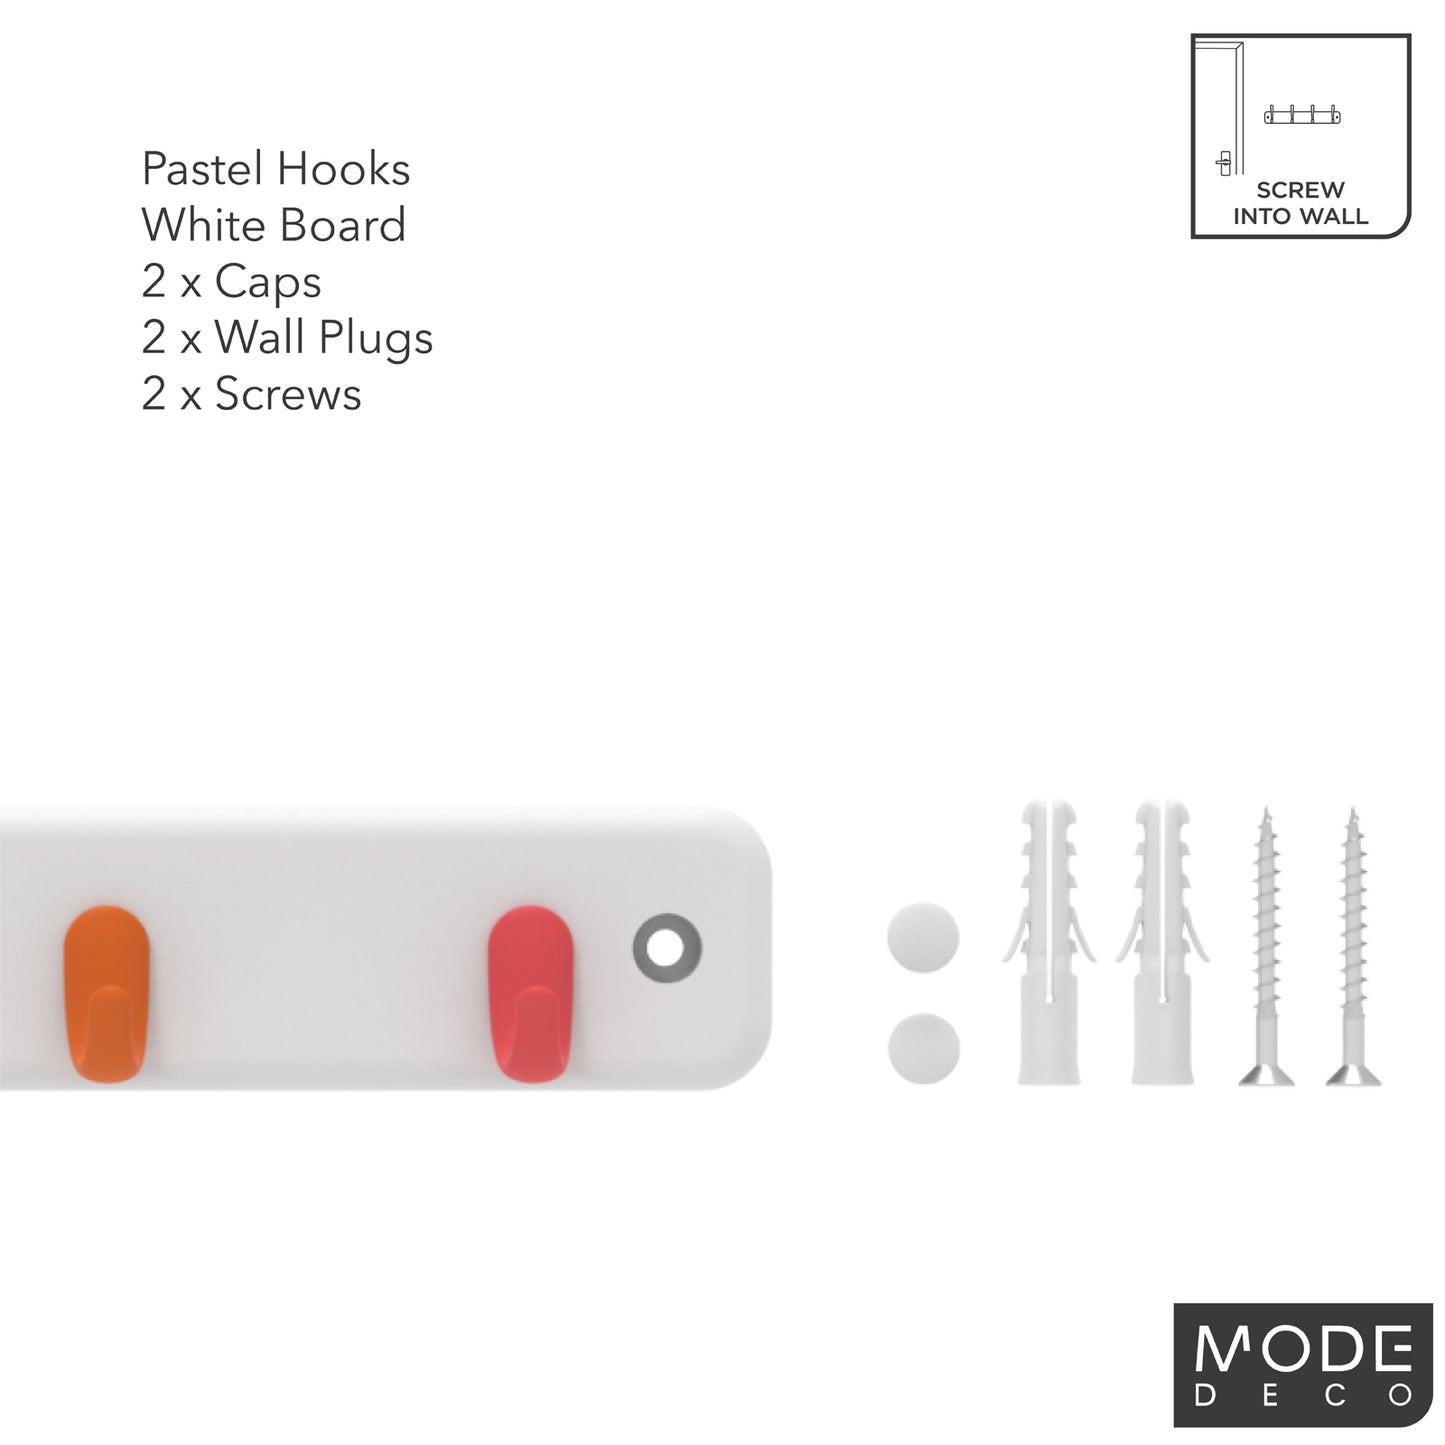 7 Pastel Hooks on White Board Key Rack